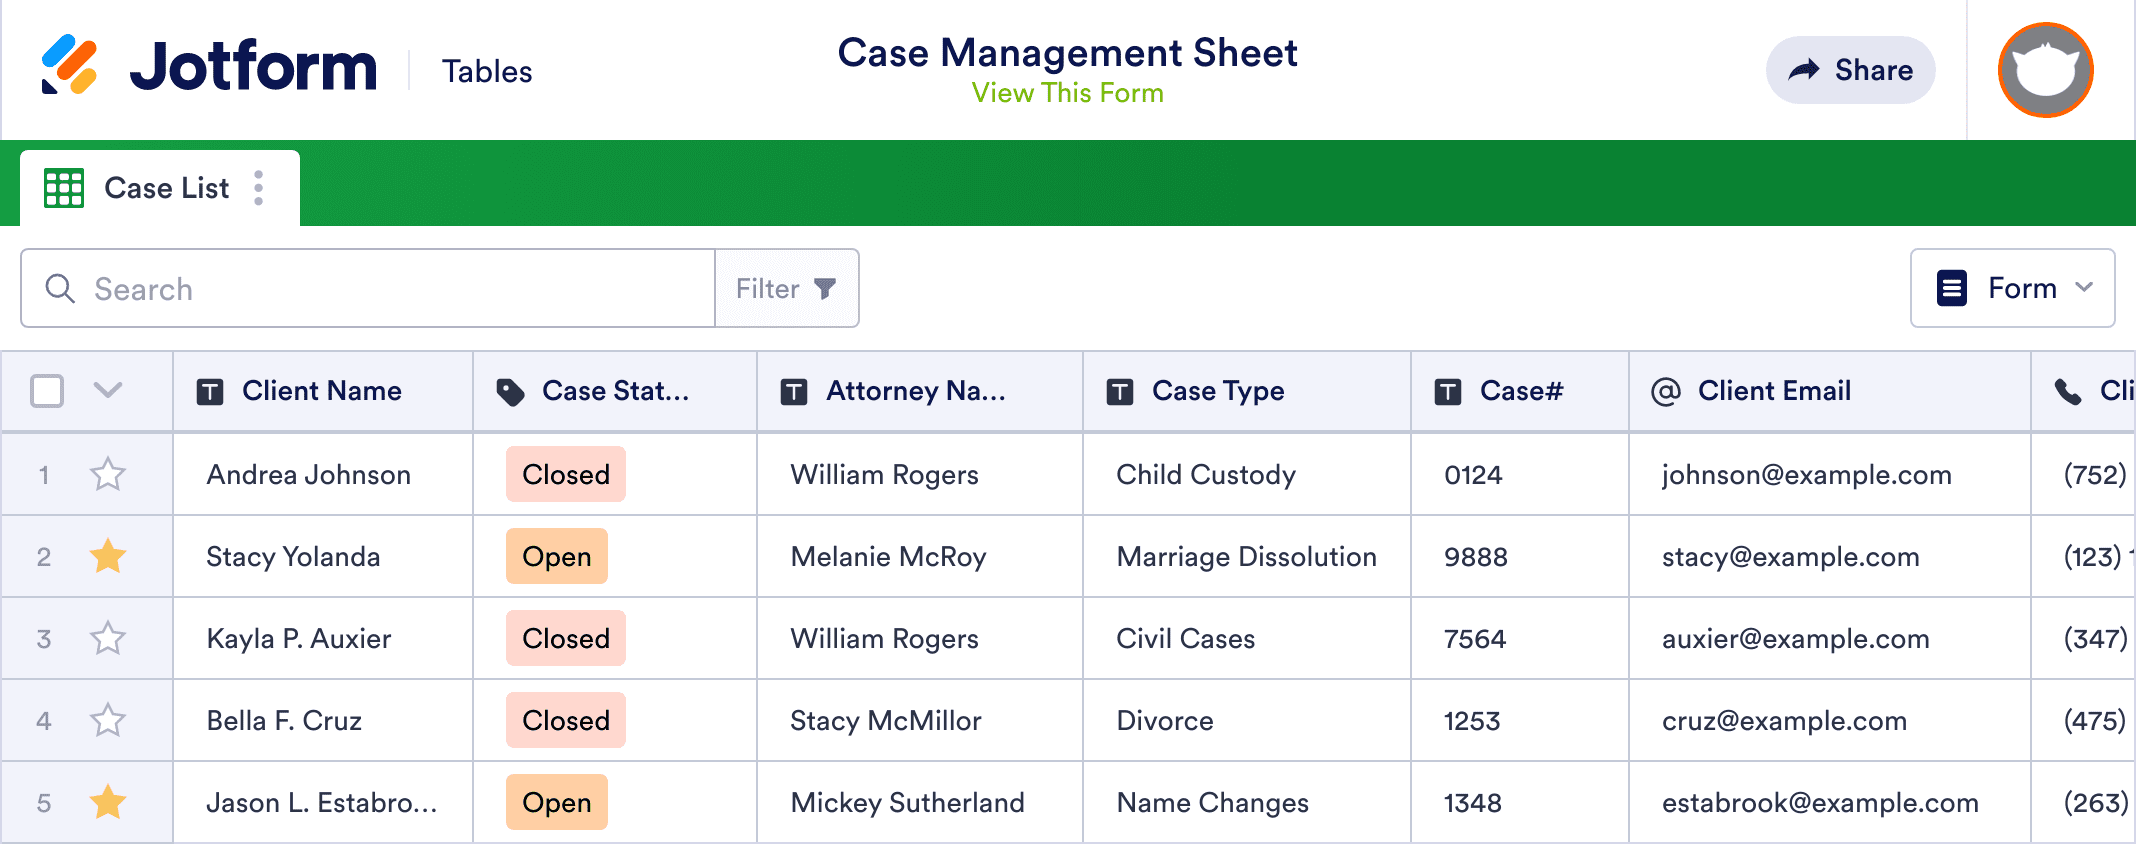 Case Management Sheet